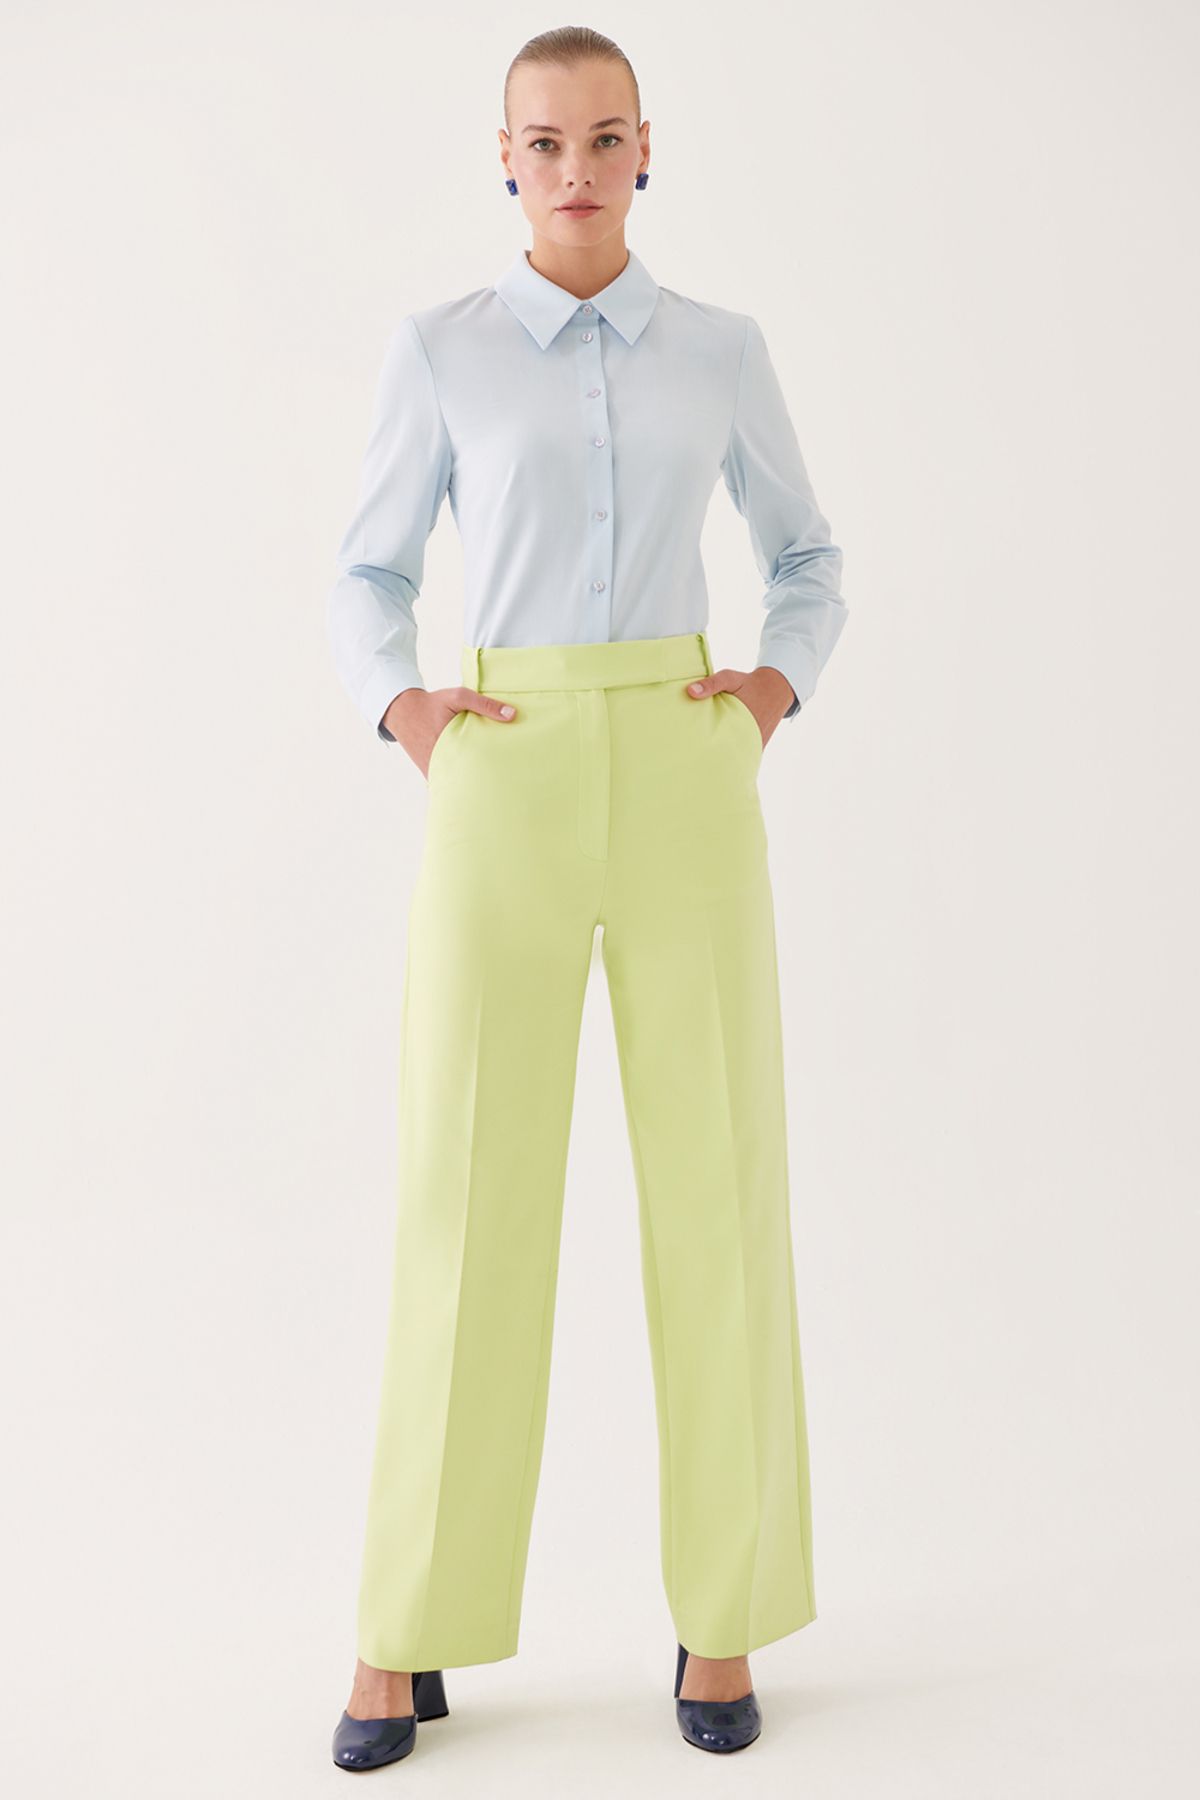 Perspective Adeos Regular Fit Uzun Boy Yüksek Bel Misket Limonu Renk Kadın Pantolon